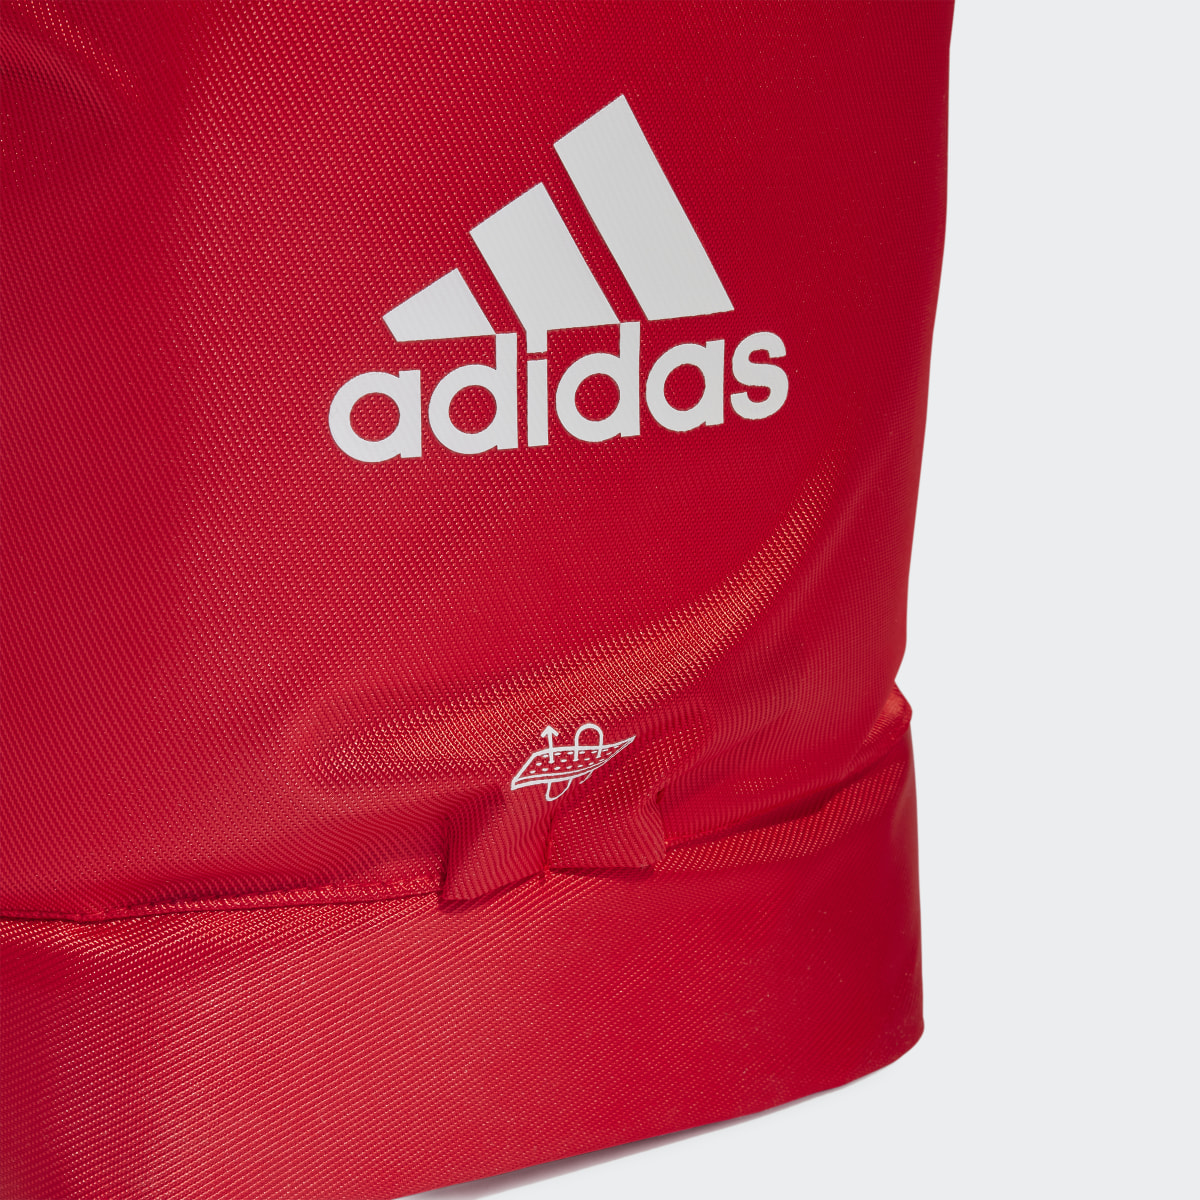 Adidas VS.6 Red/Grey Hockey Stick Bag. 7